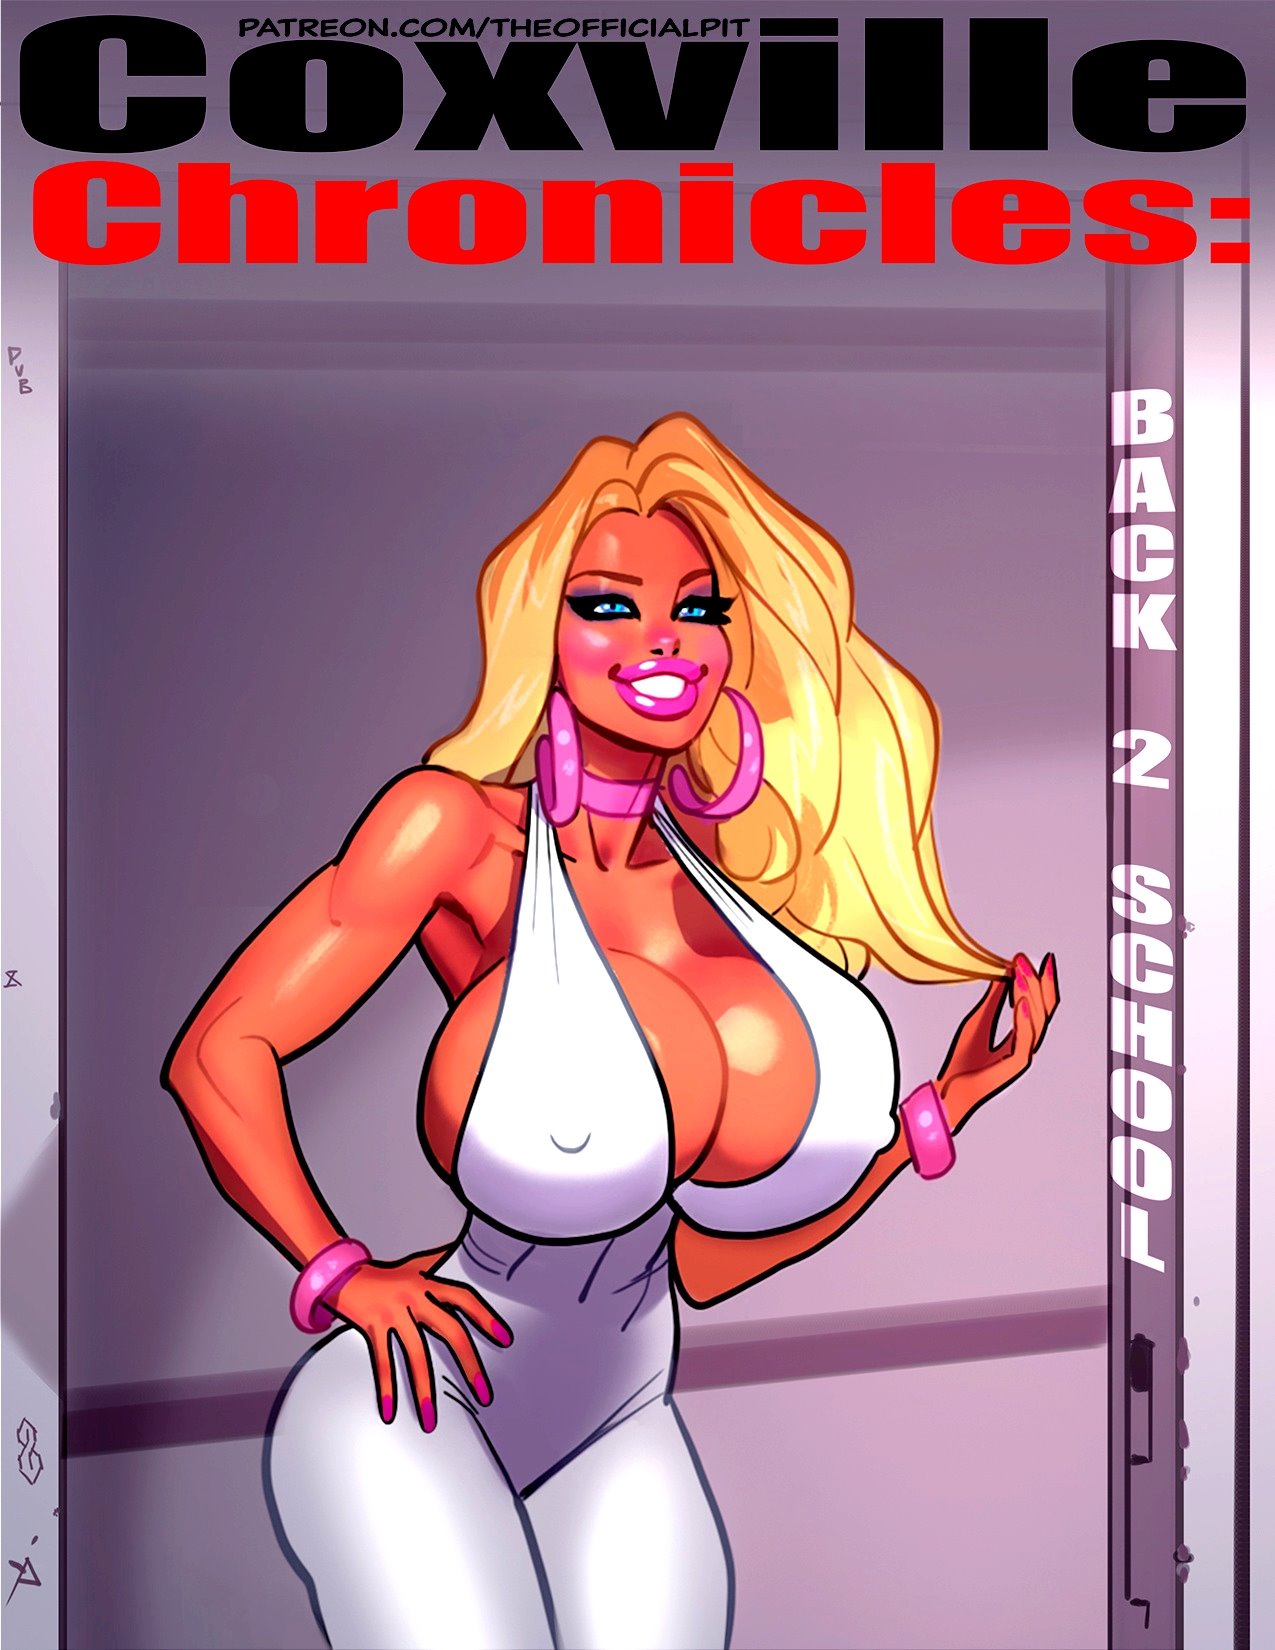 Coxville chronicles john persons porn comics